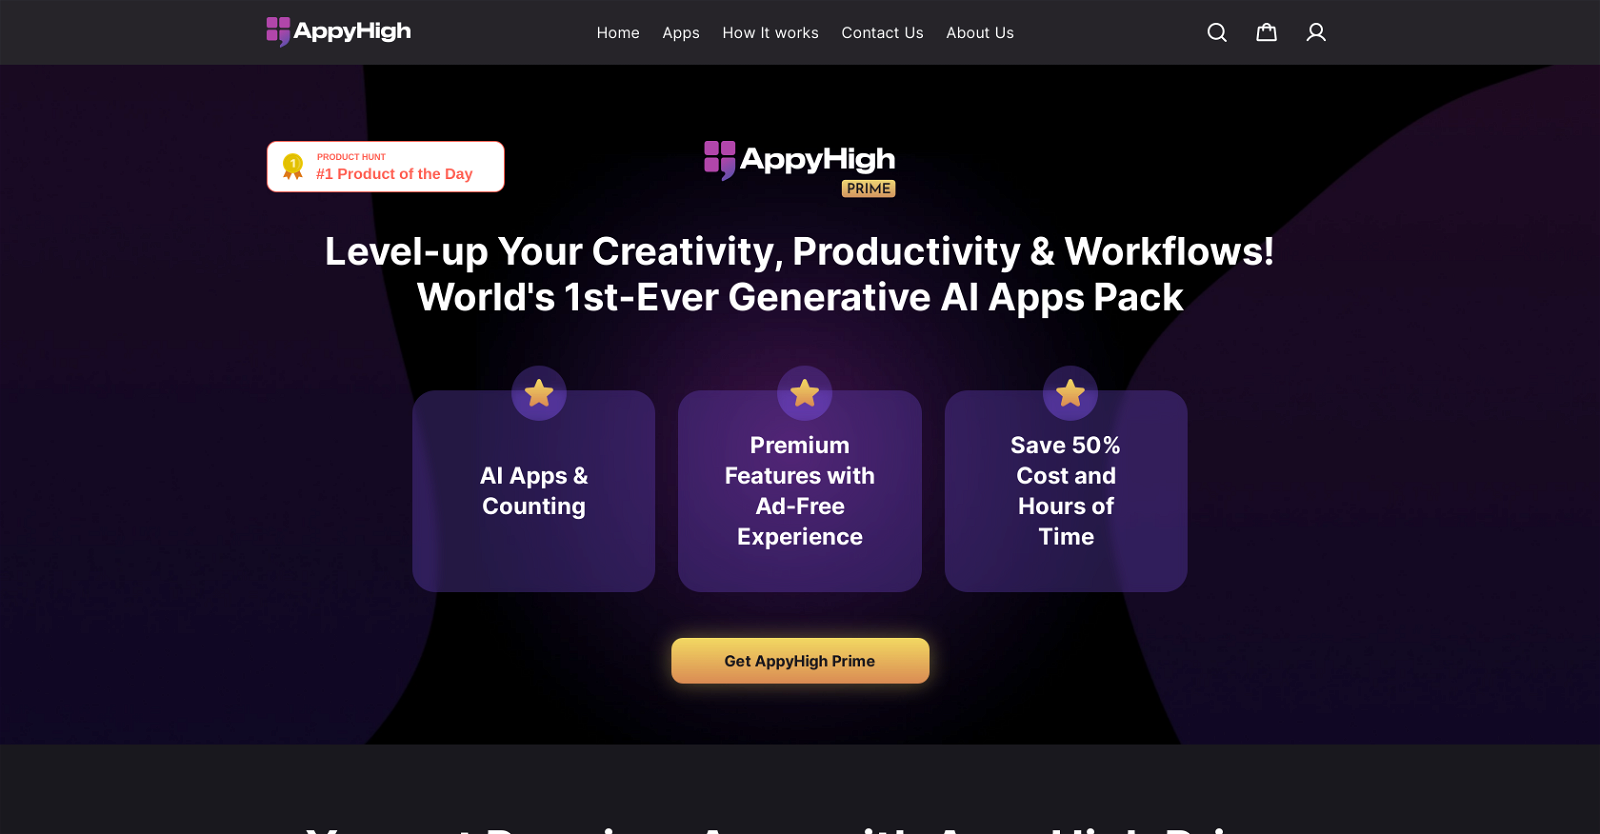 AppyHigh website